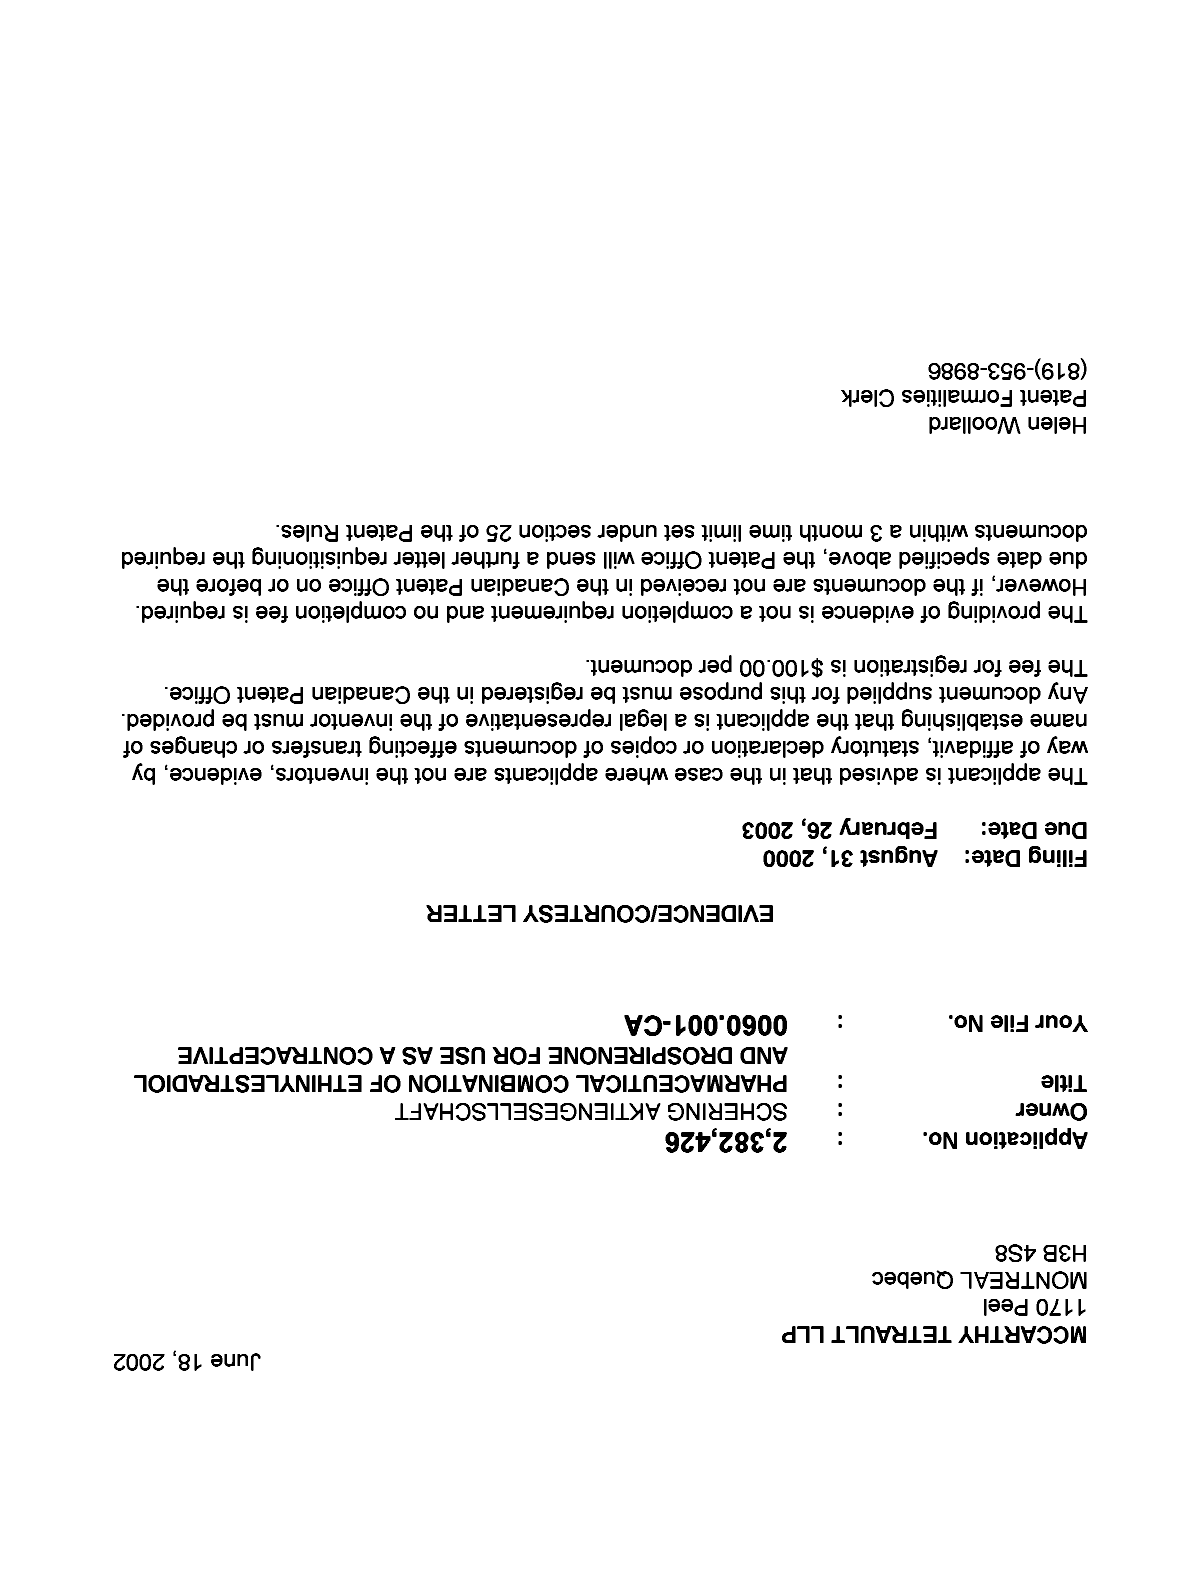 Canadian Patent Document 2382426. Correspondence 20011211. Image 1 of 1